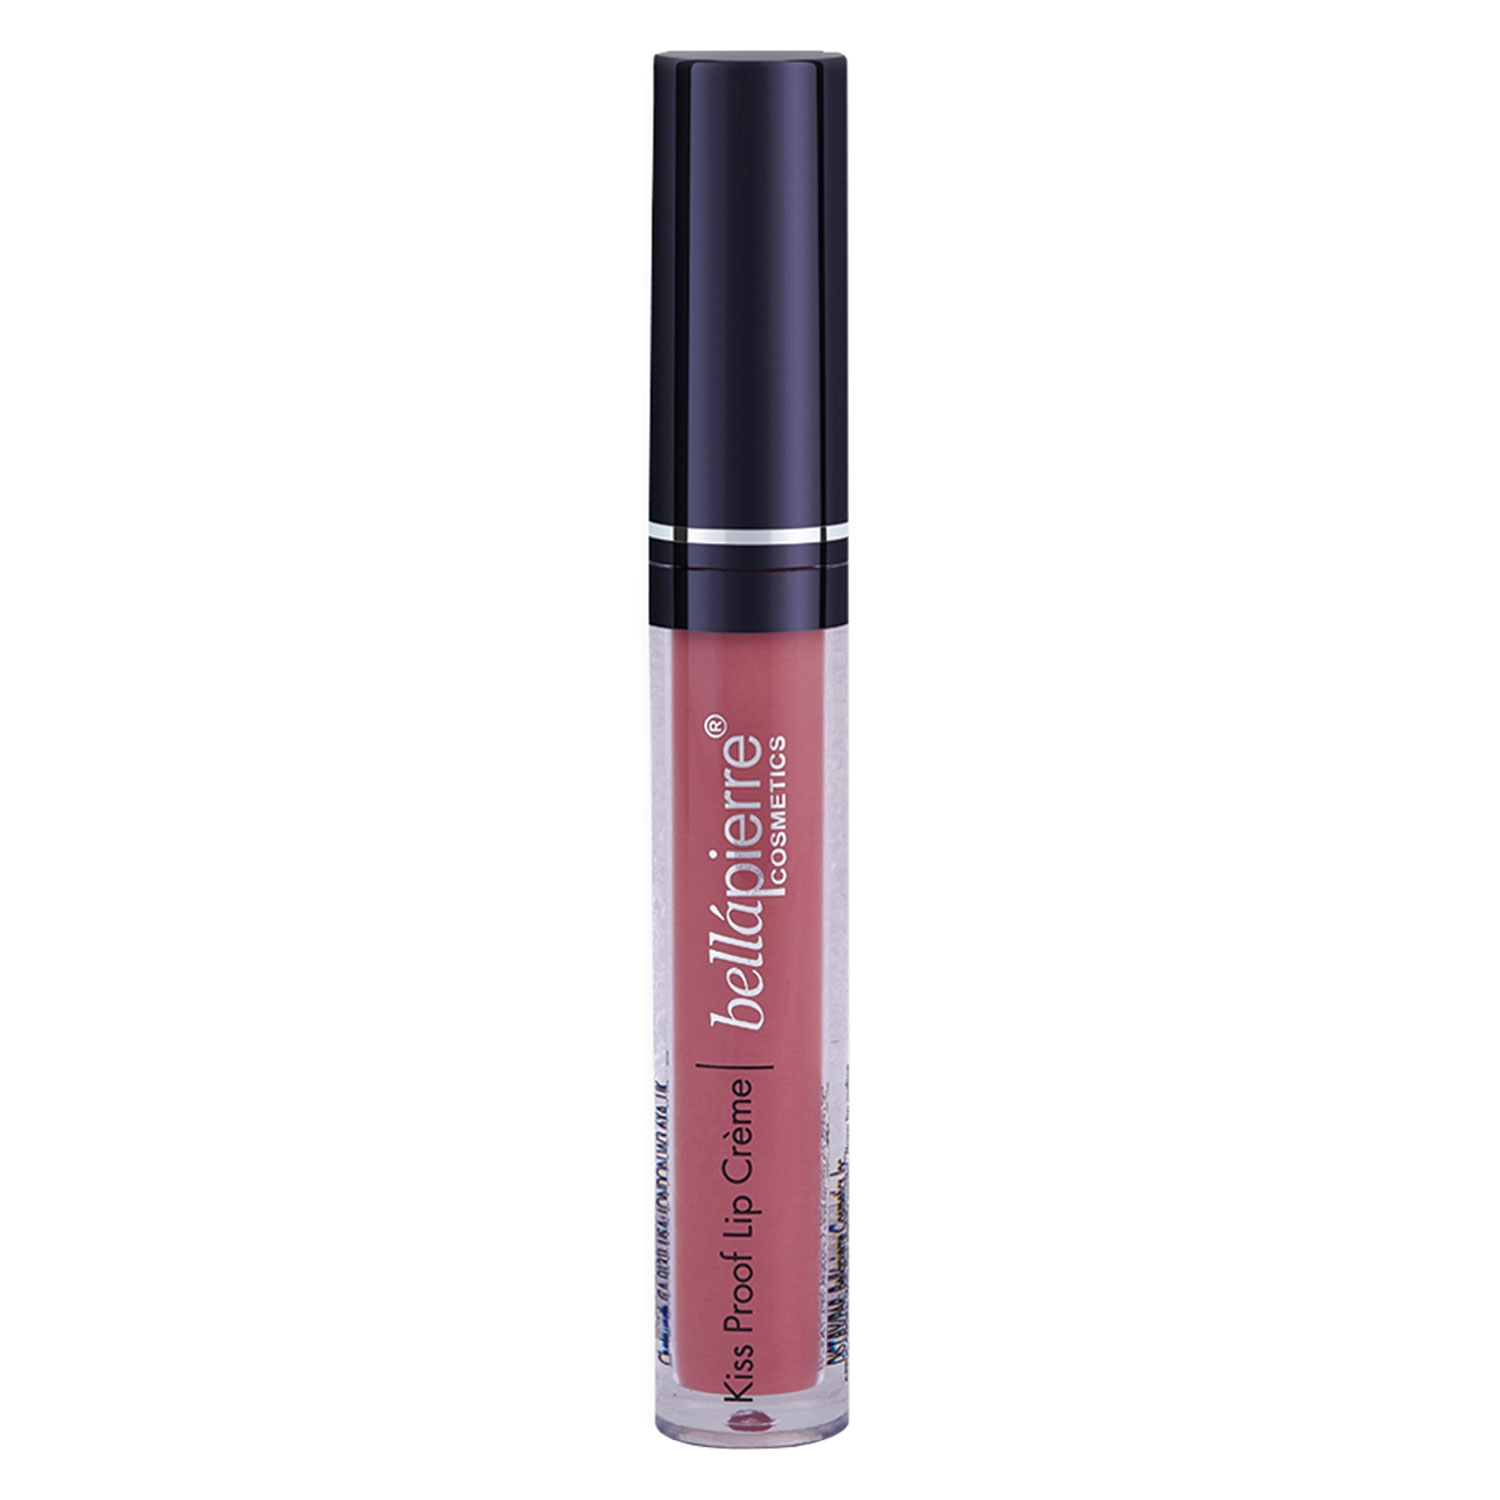 Produktbild von bellapierre Lips - Kiss Proof Lip Crème Antique Pink